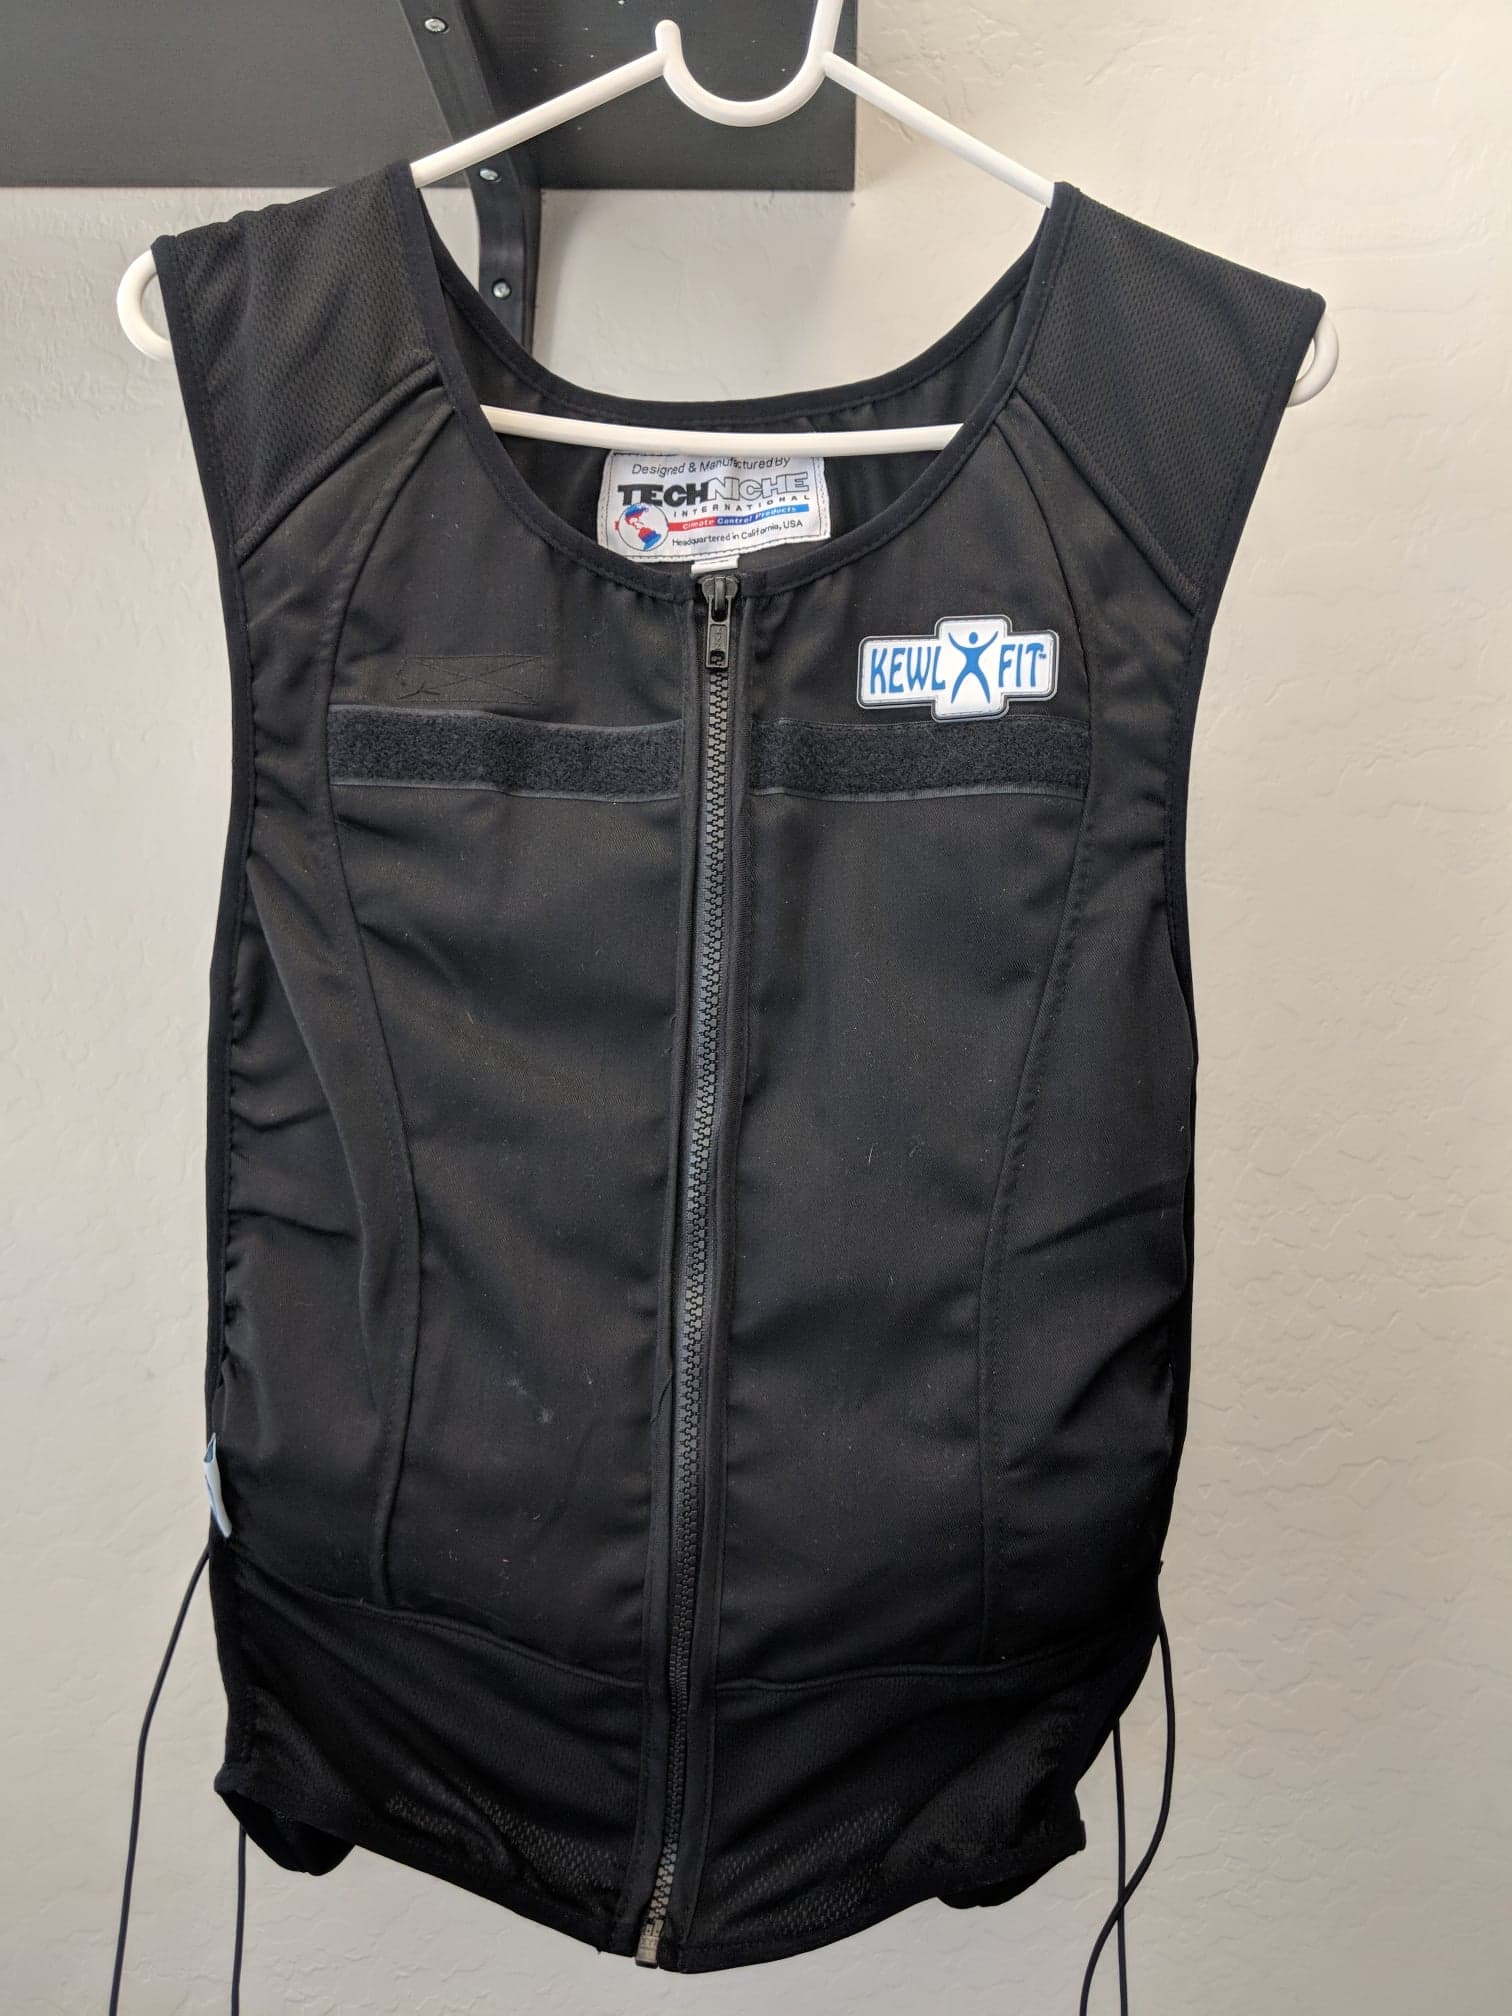 KewlFit Nomex Cooling Vest